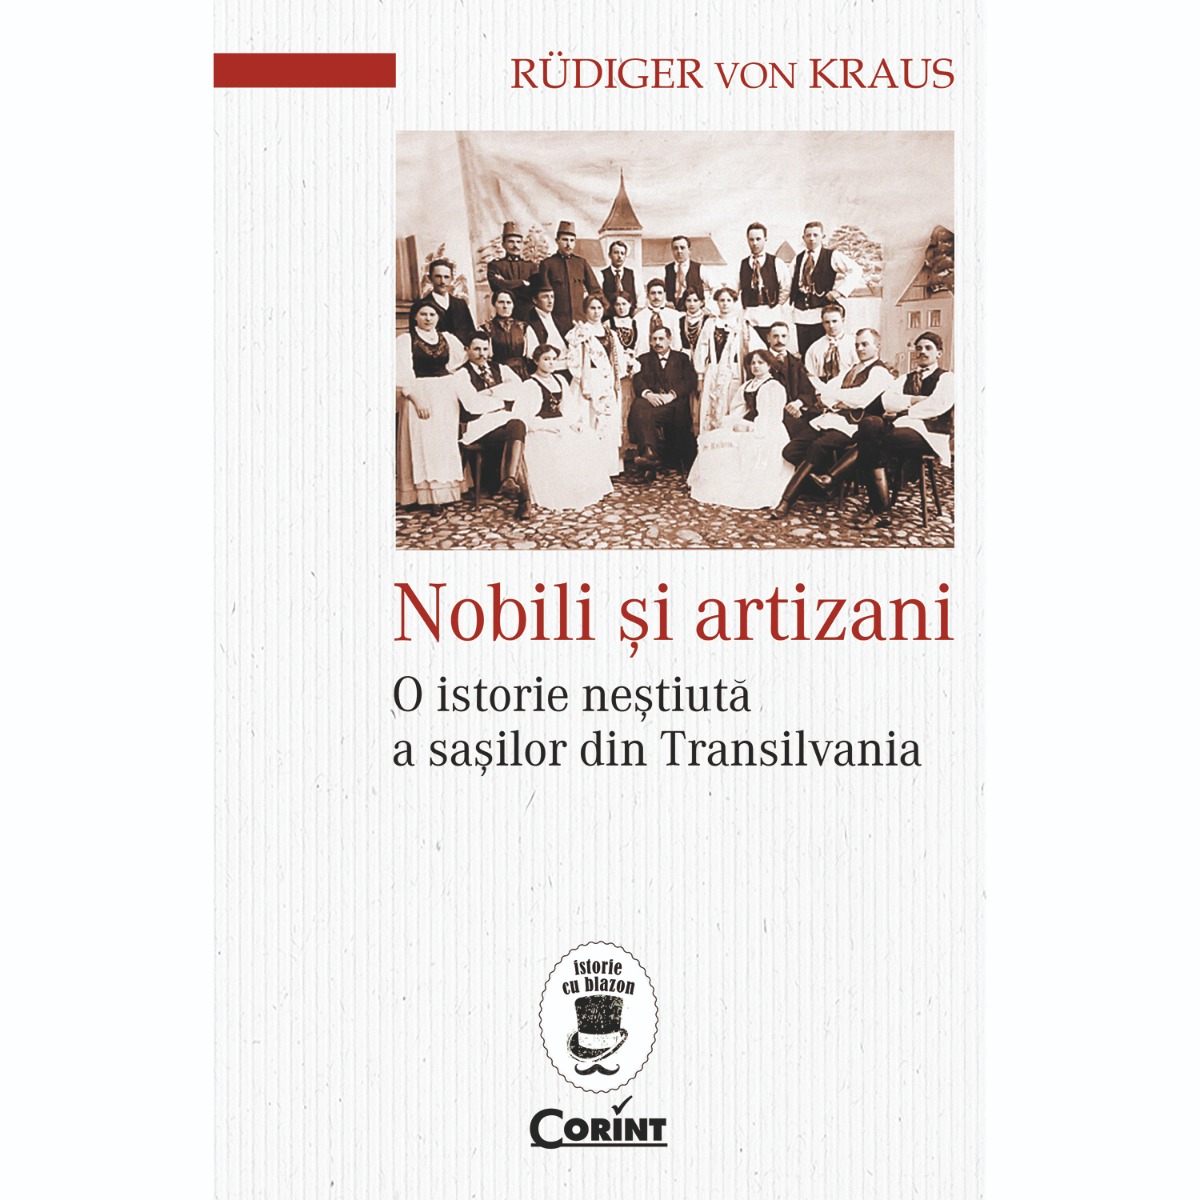 Carte Editura Corint, Nobili si artizani, Rudiger von Kraus Corint